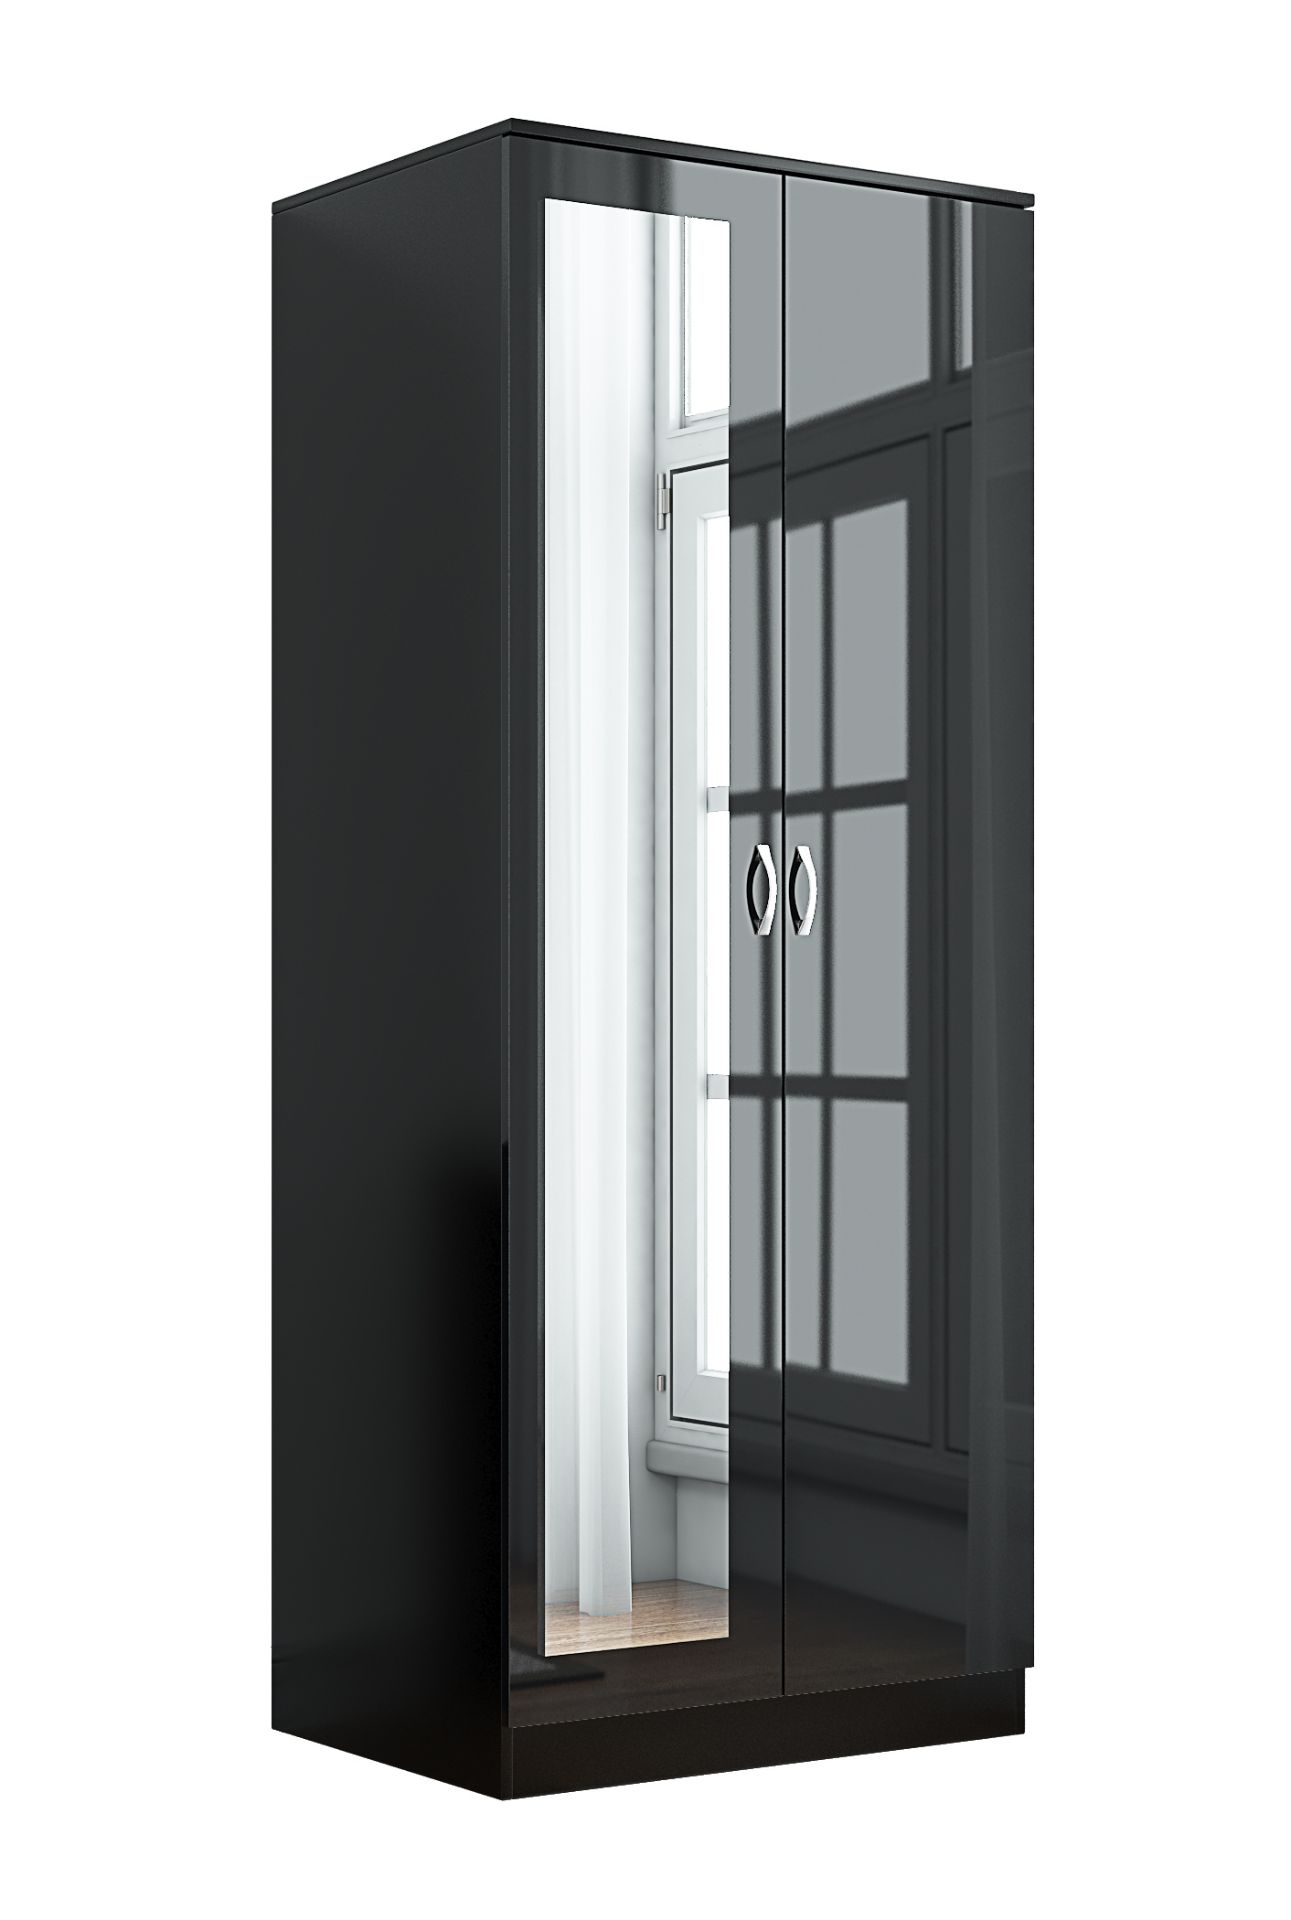 BLACK MIRRORED HIGH GLOSS BEDROOM FURNITURE SET - 2 DOOR WARDROBE, CHEST & BEDSIDE BRAND NEW - Image 3 of 7